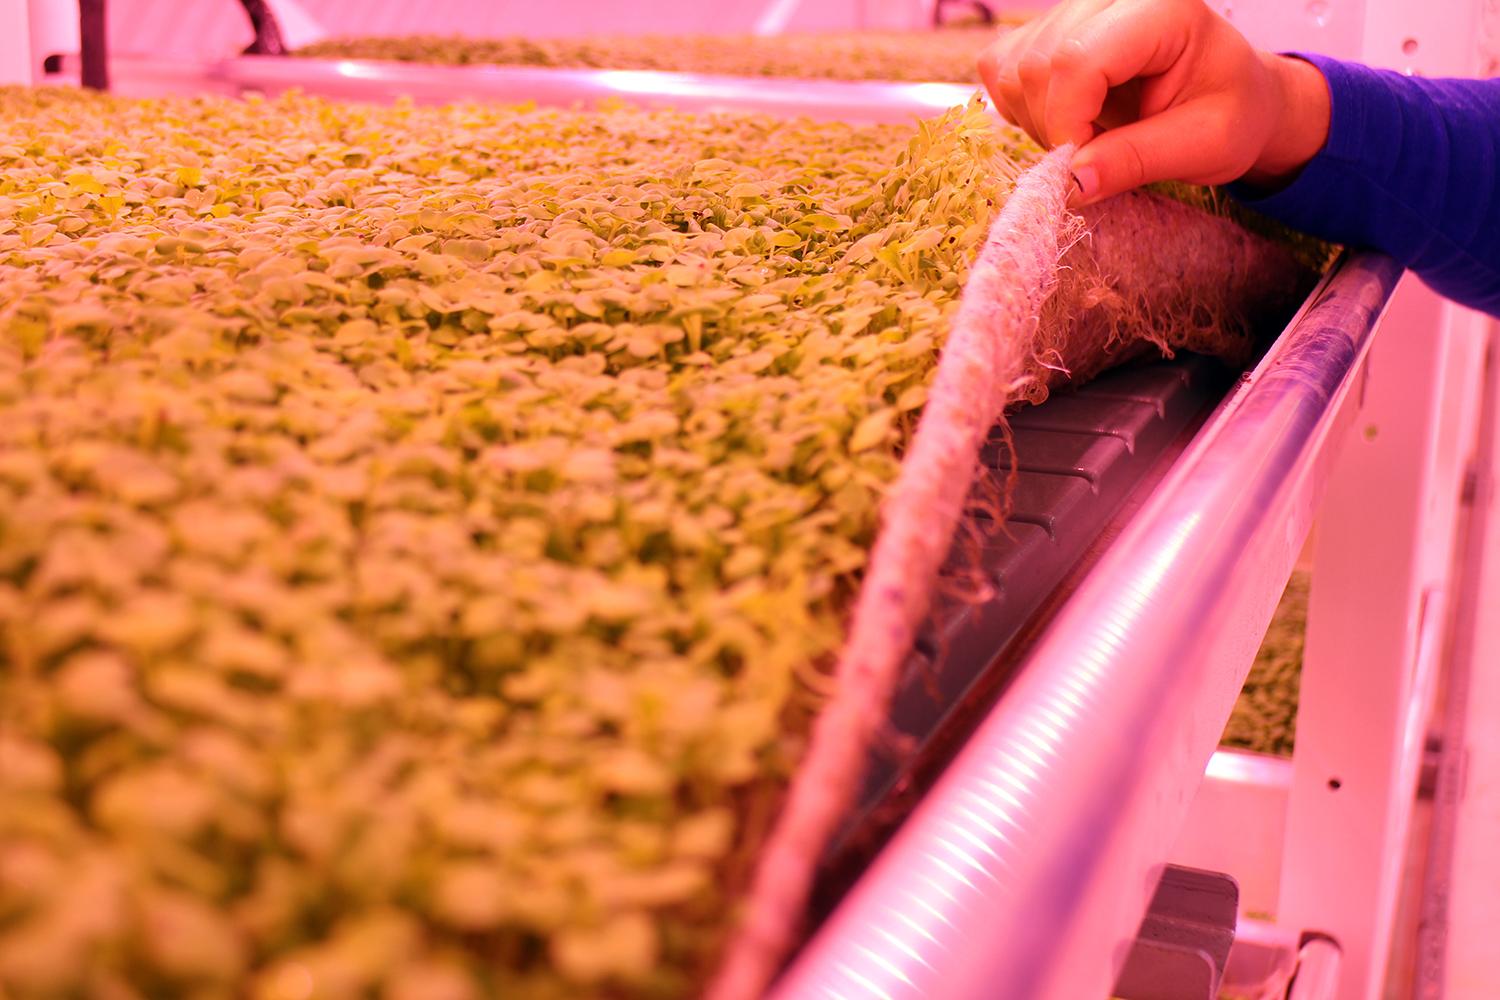 londons underground farm zero carbon food growing carpet base